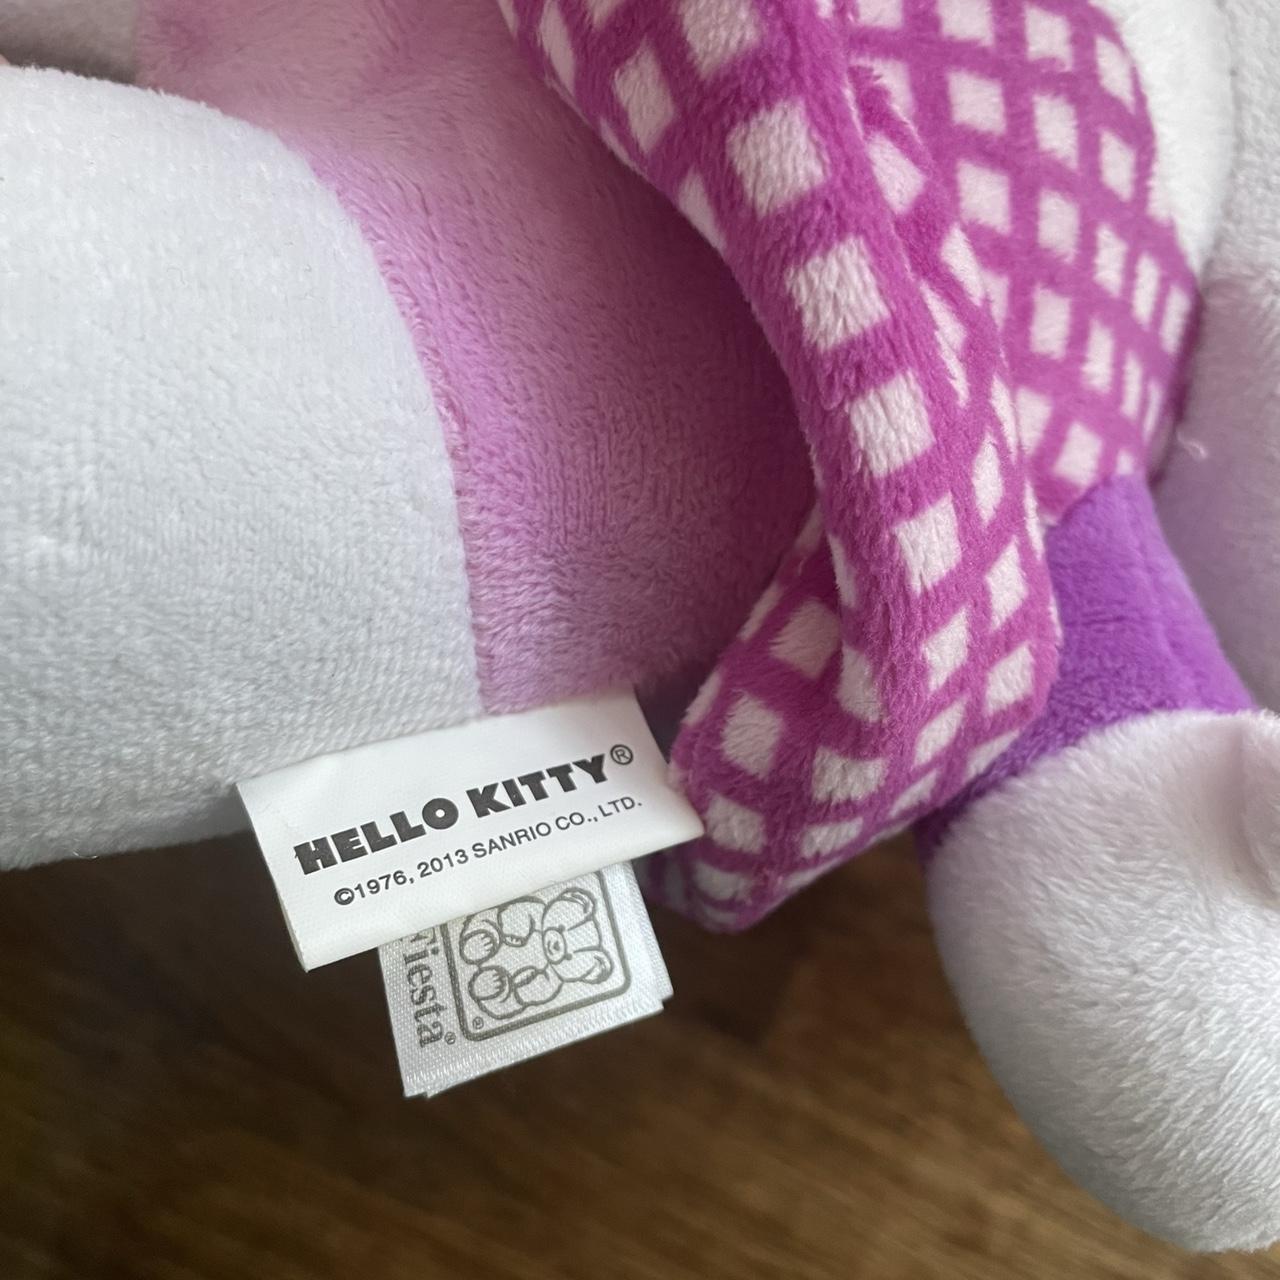 Product Image 2 - 2013 Hello Kitty plush. So